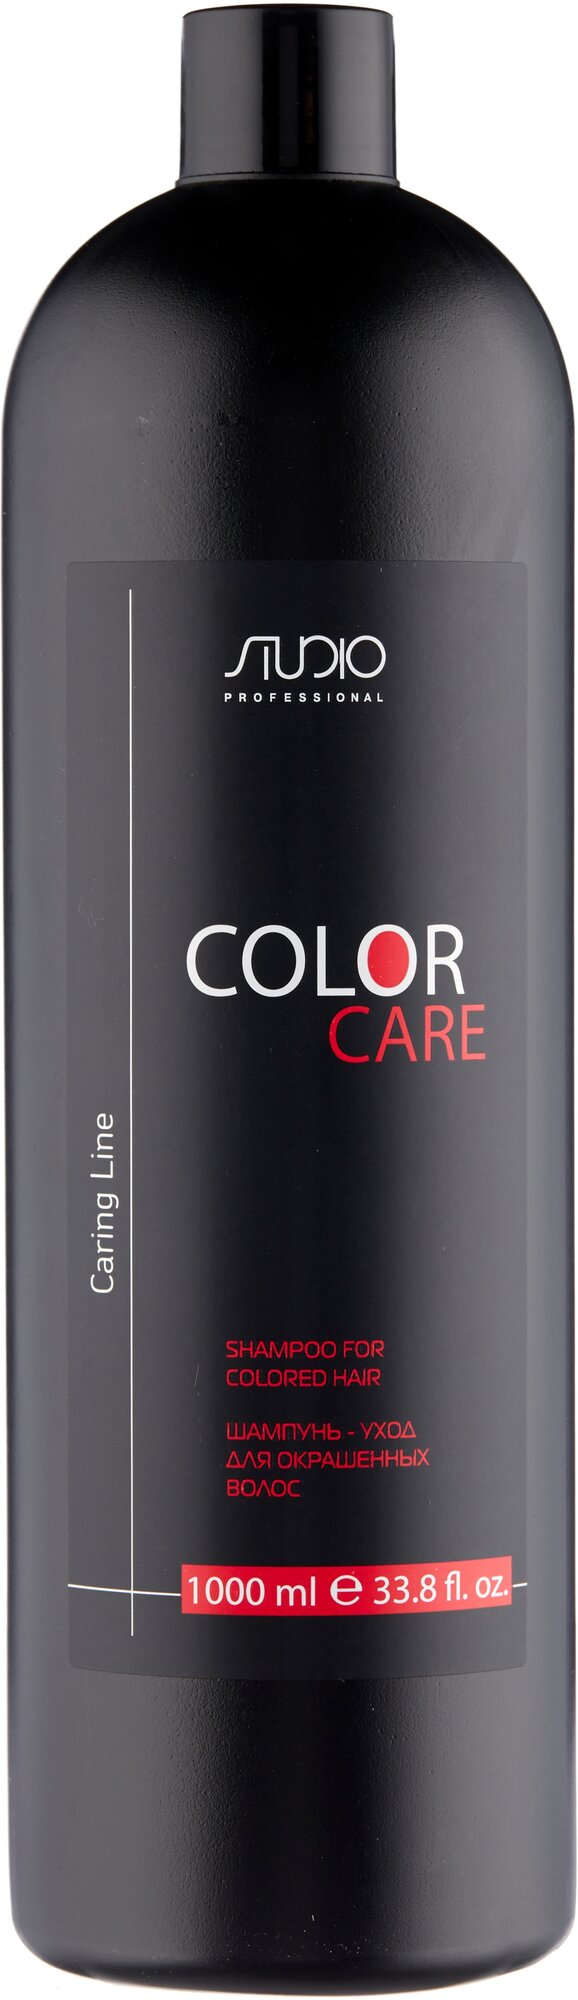 Kapous шампунь-уход Studio Professional Caring Line Color Care для окрашенных волос, 1000 мл